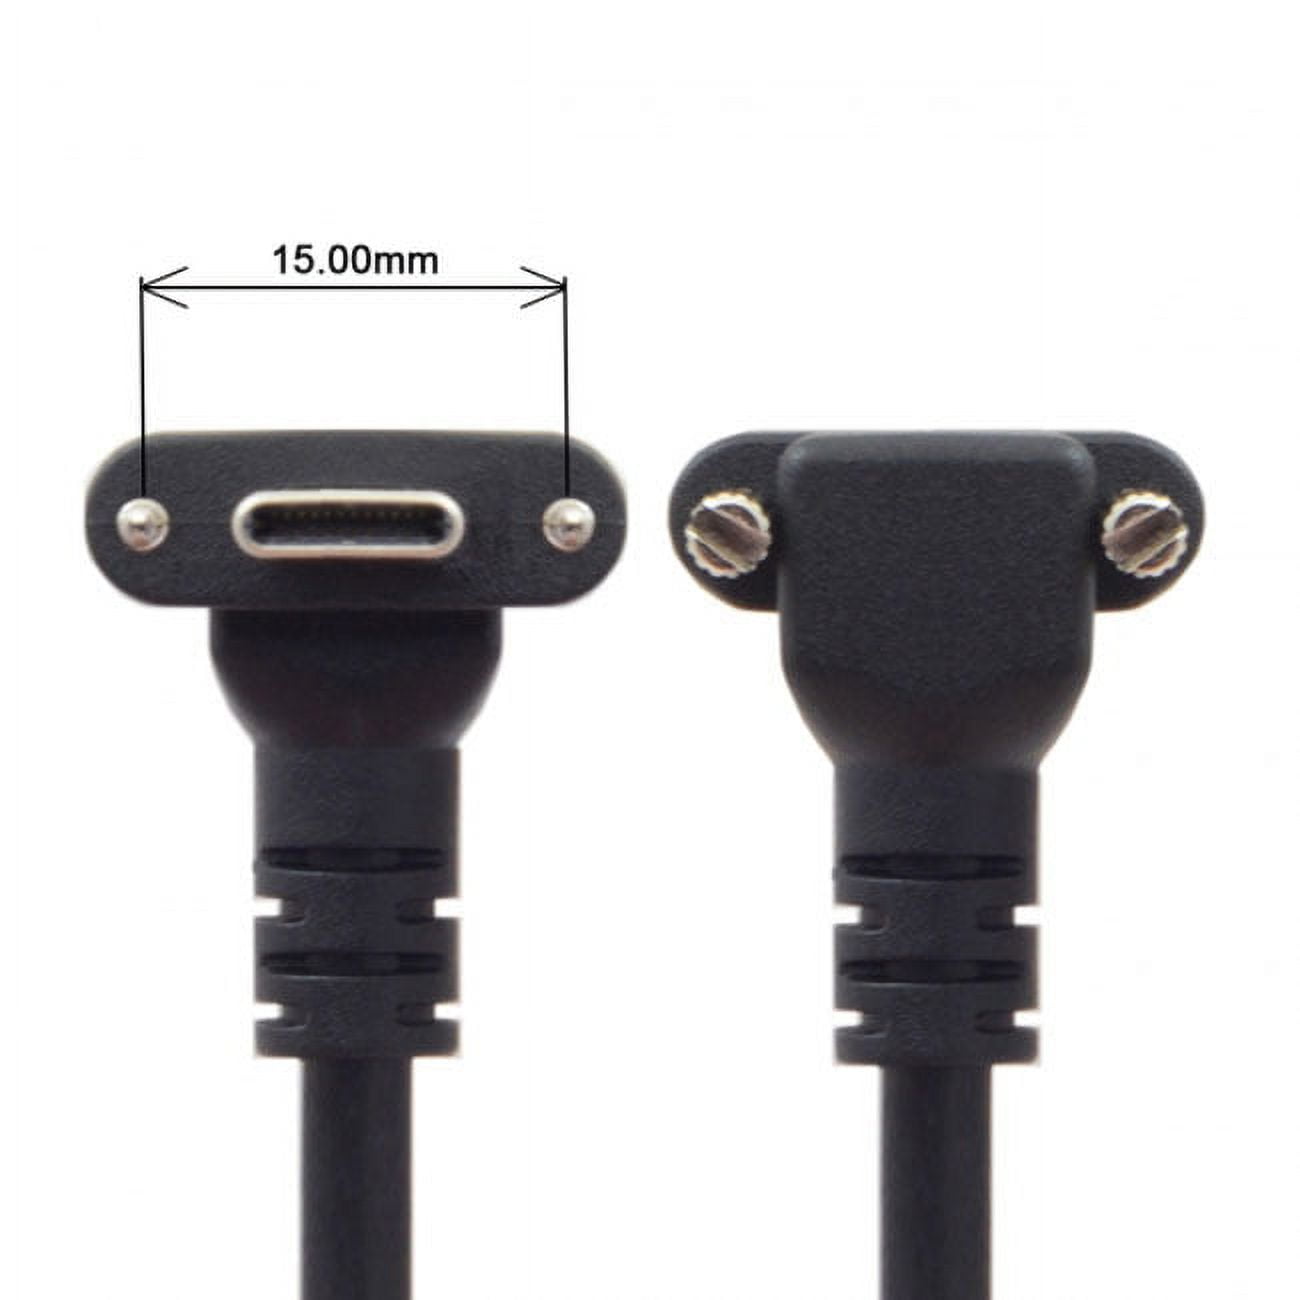  Xiwai 5m USB-C USB 3.1 Type C Male to USB3.0 Type A